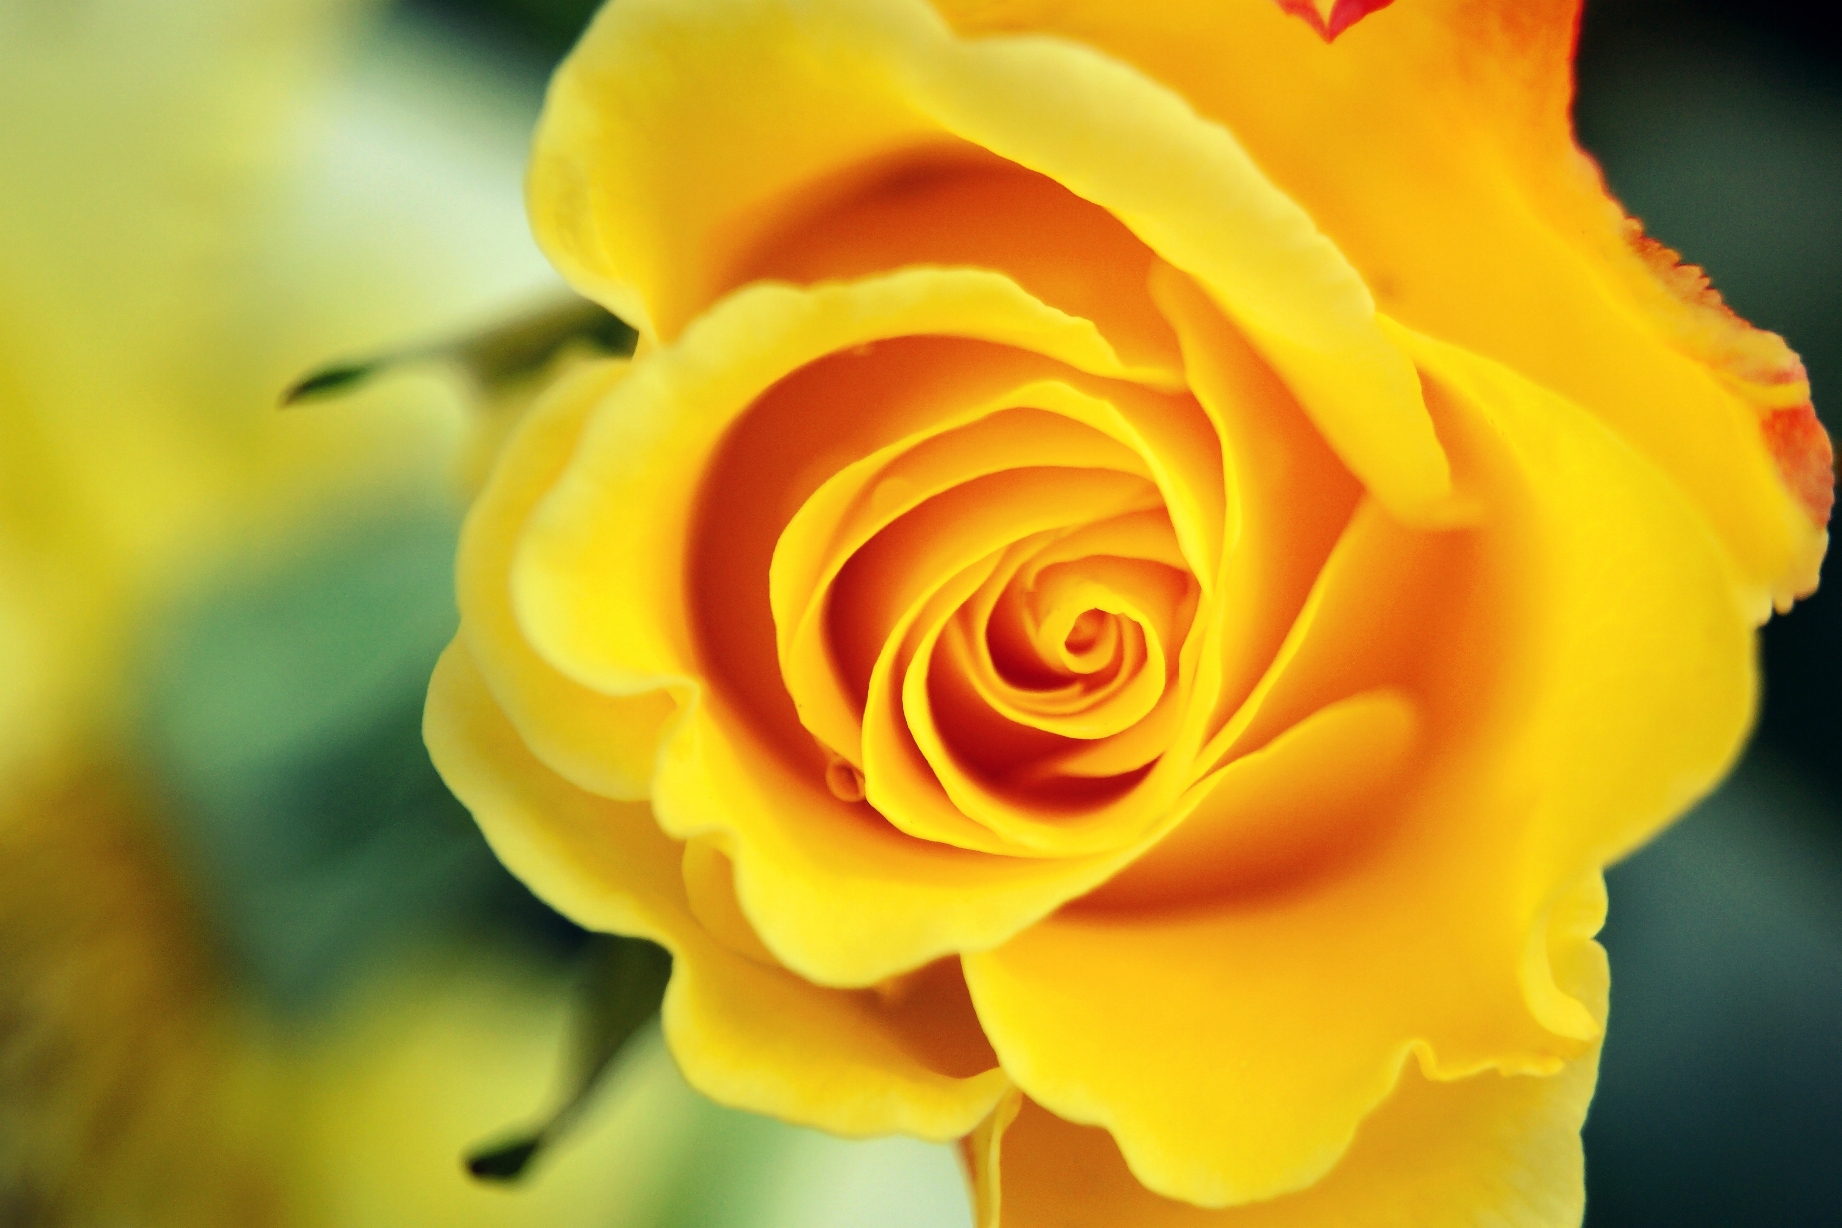 rose flower wallpaper hd free download,flower,flowering plant,julia child rose,garden roses,rose